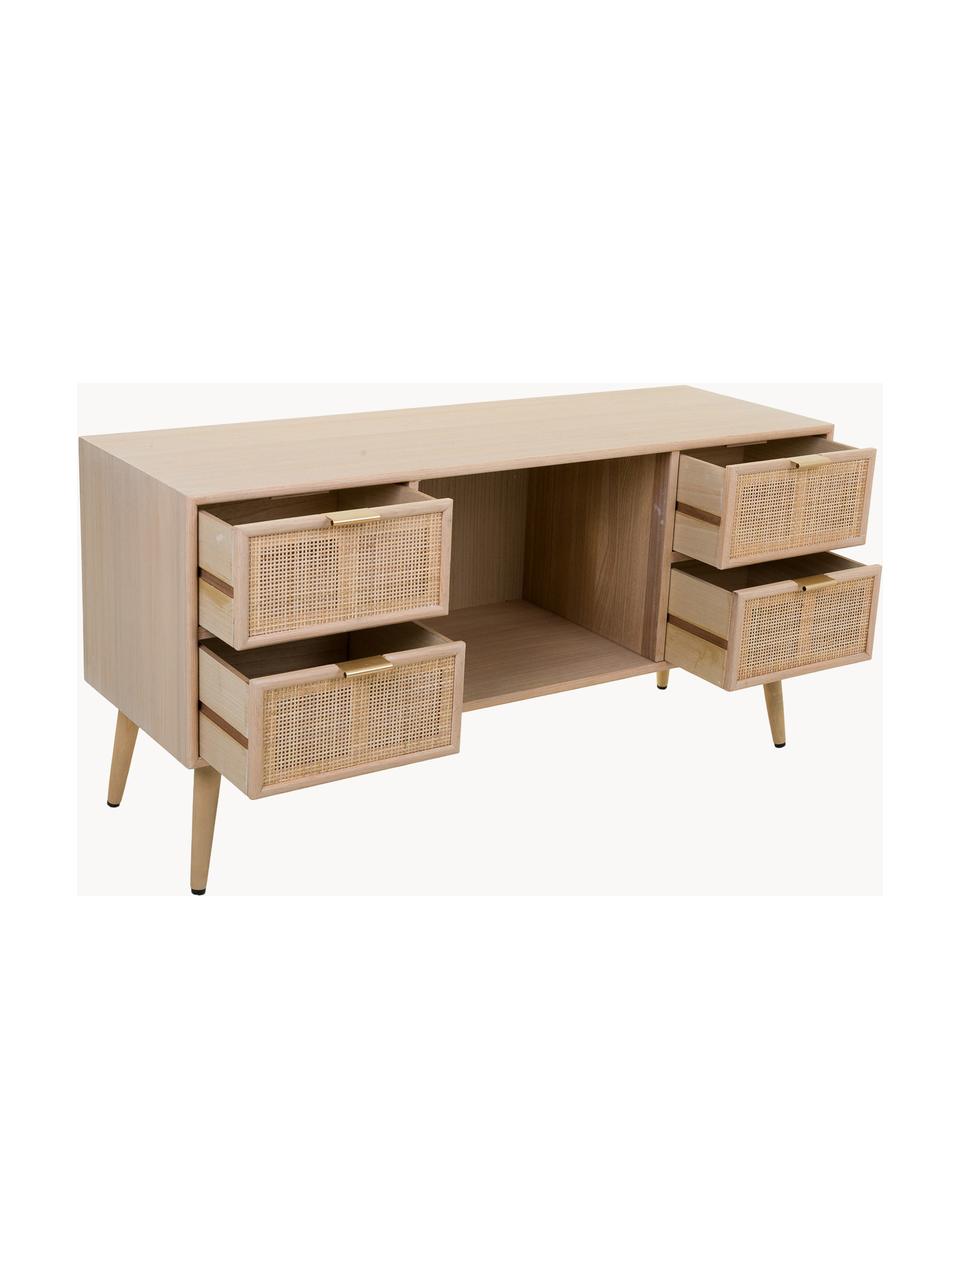 Tv-meubel Cayetana van hout, Frame: MDF, fineer, Handvatten: metaal, Poten: bamboehout, gelakt, Bruin, hout, B 120 cm x H 60 cm